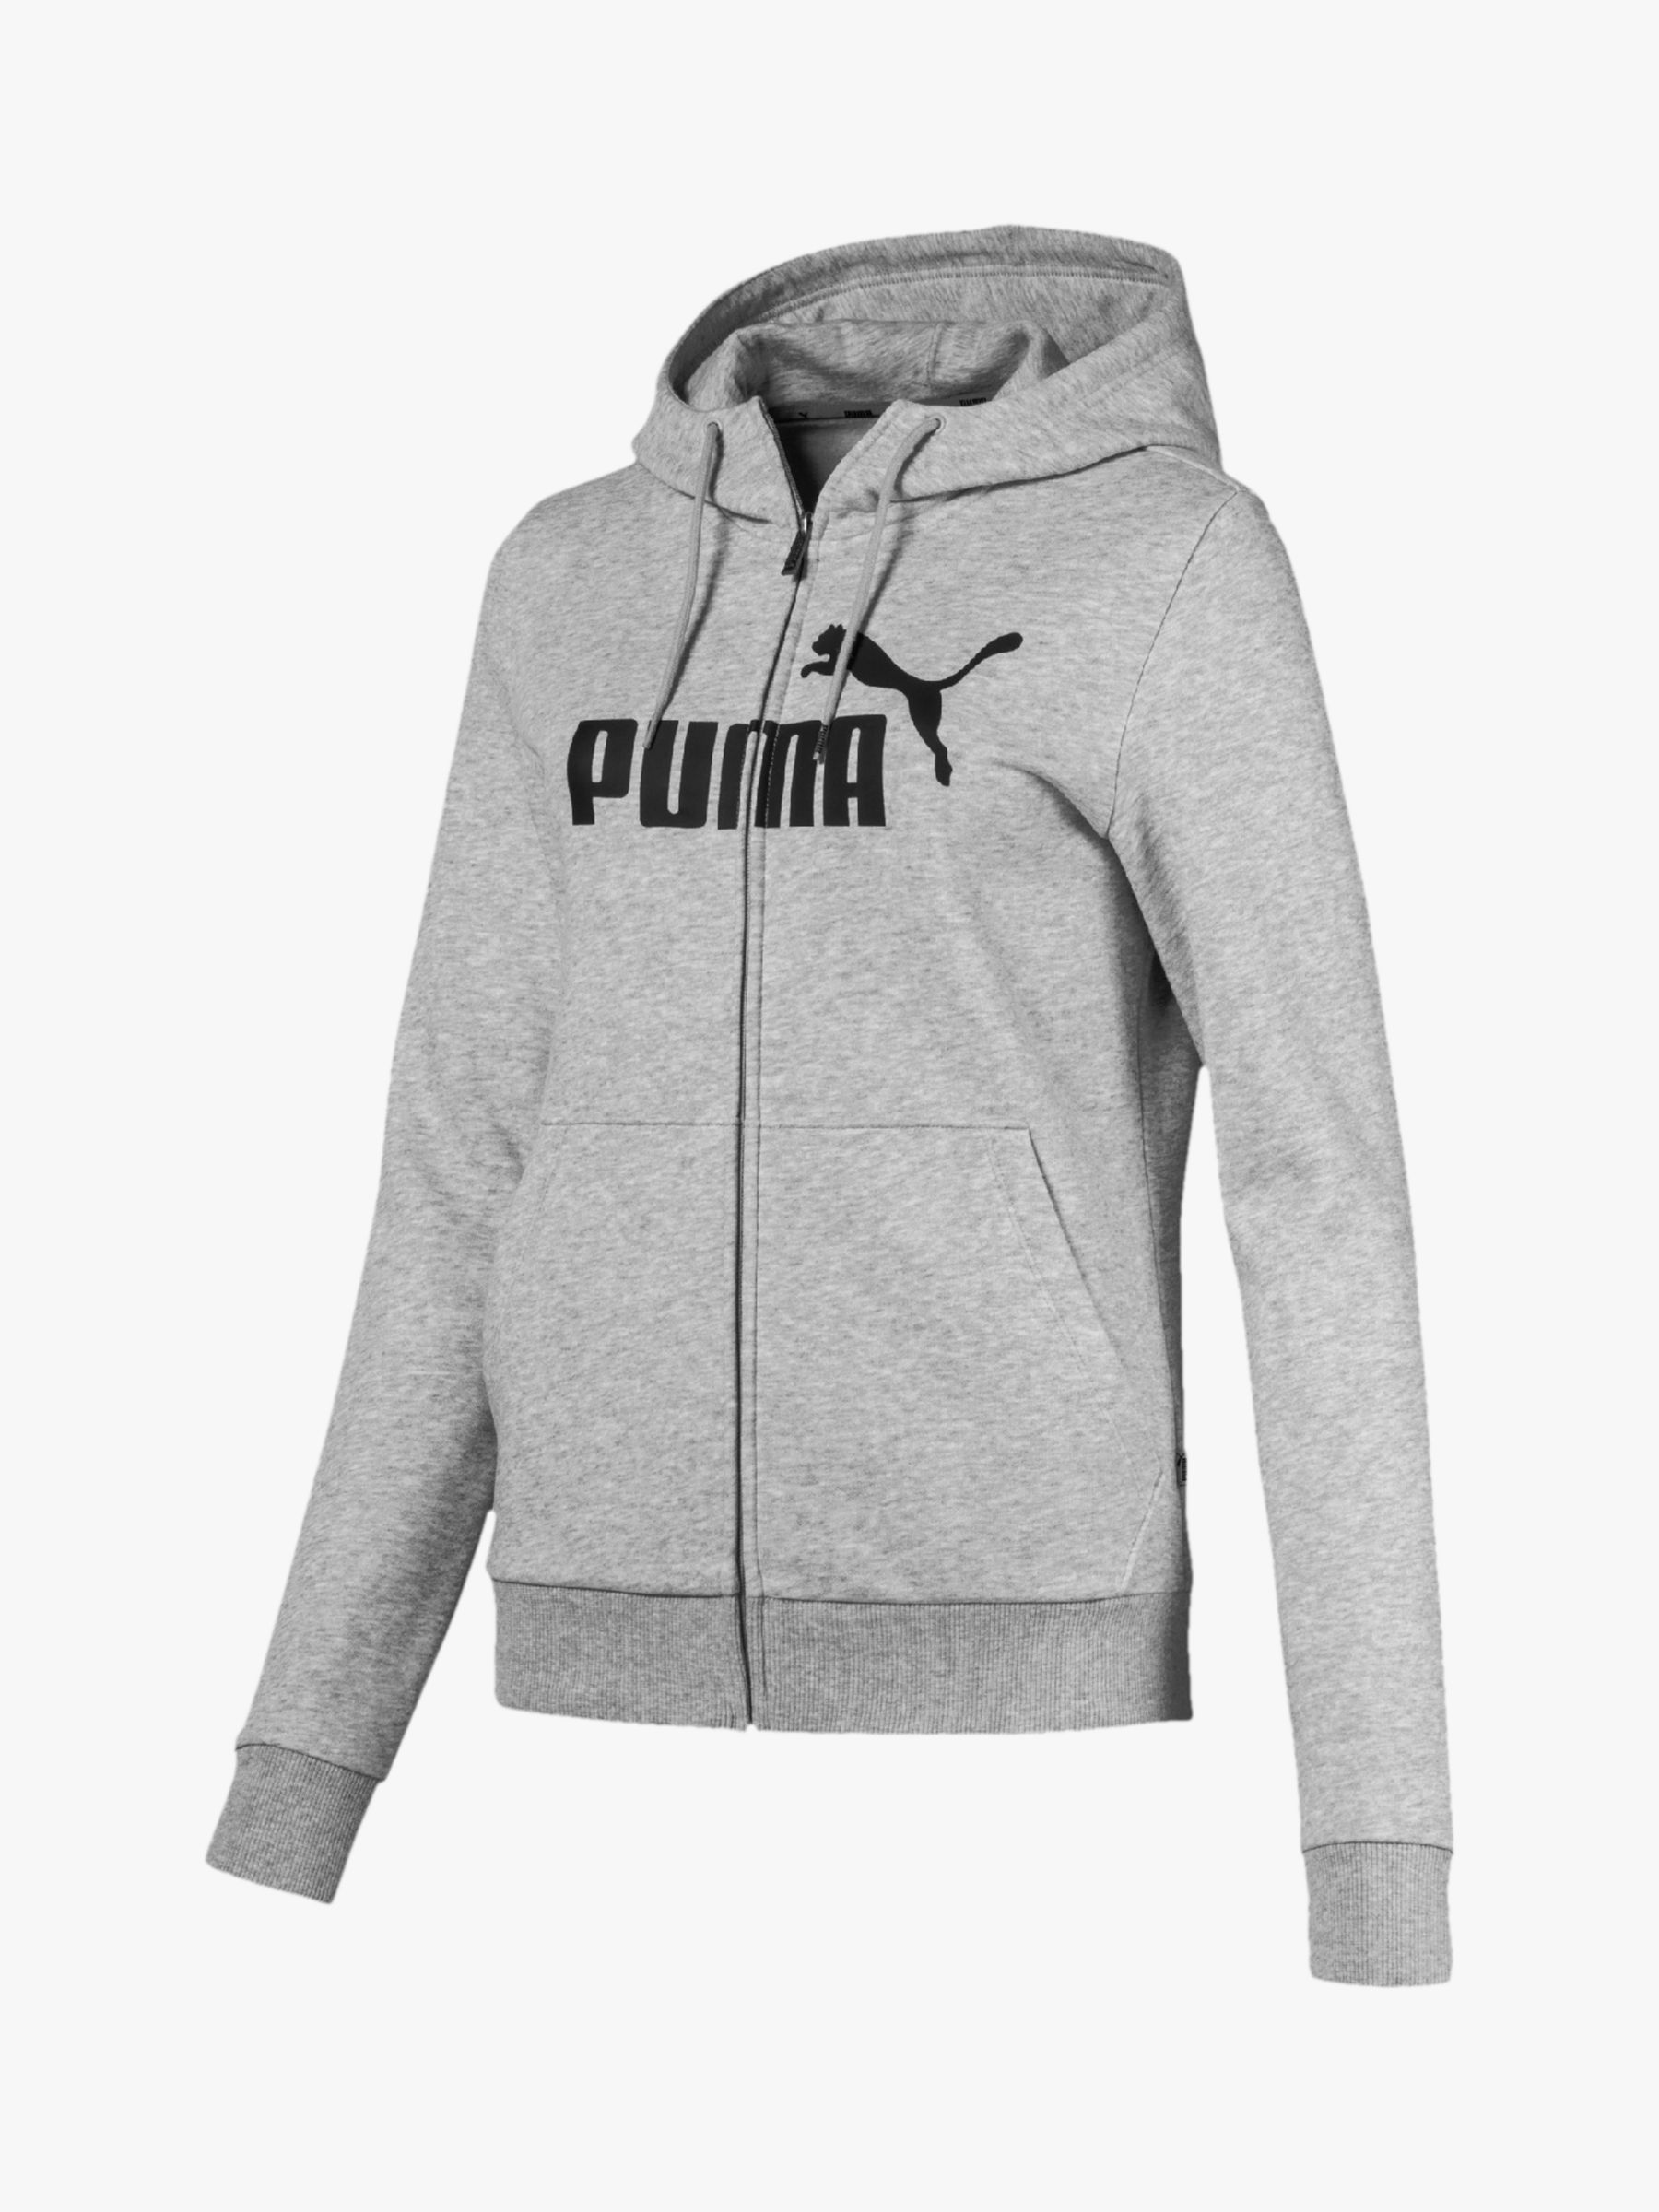 grey puma outfit